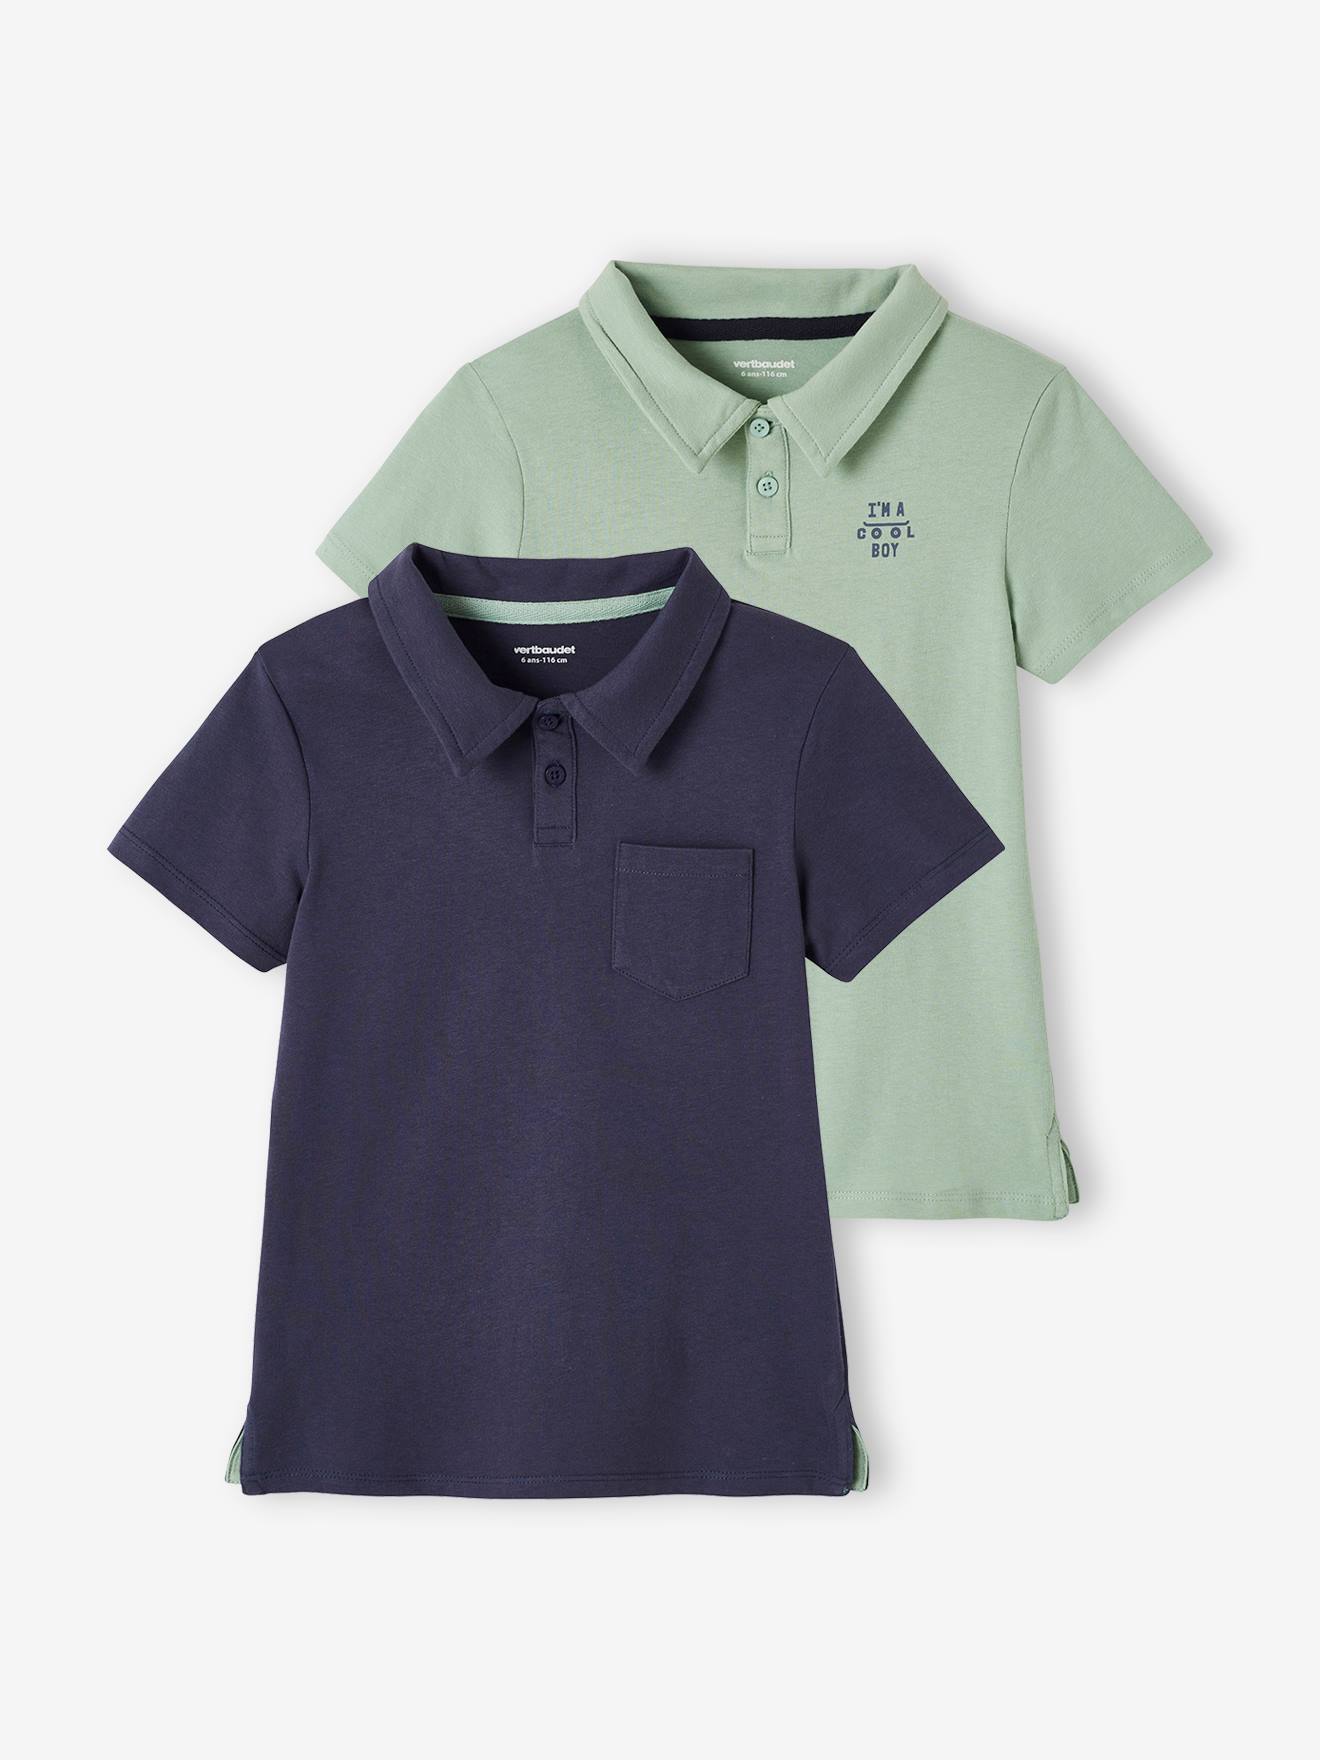 Kinder Jungs Shirts Polo ML 3 ans Tops und Hemden Poloshirts Kiabi Poloshirts 